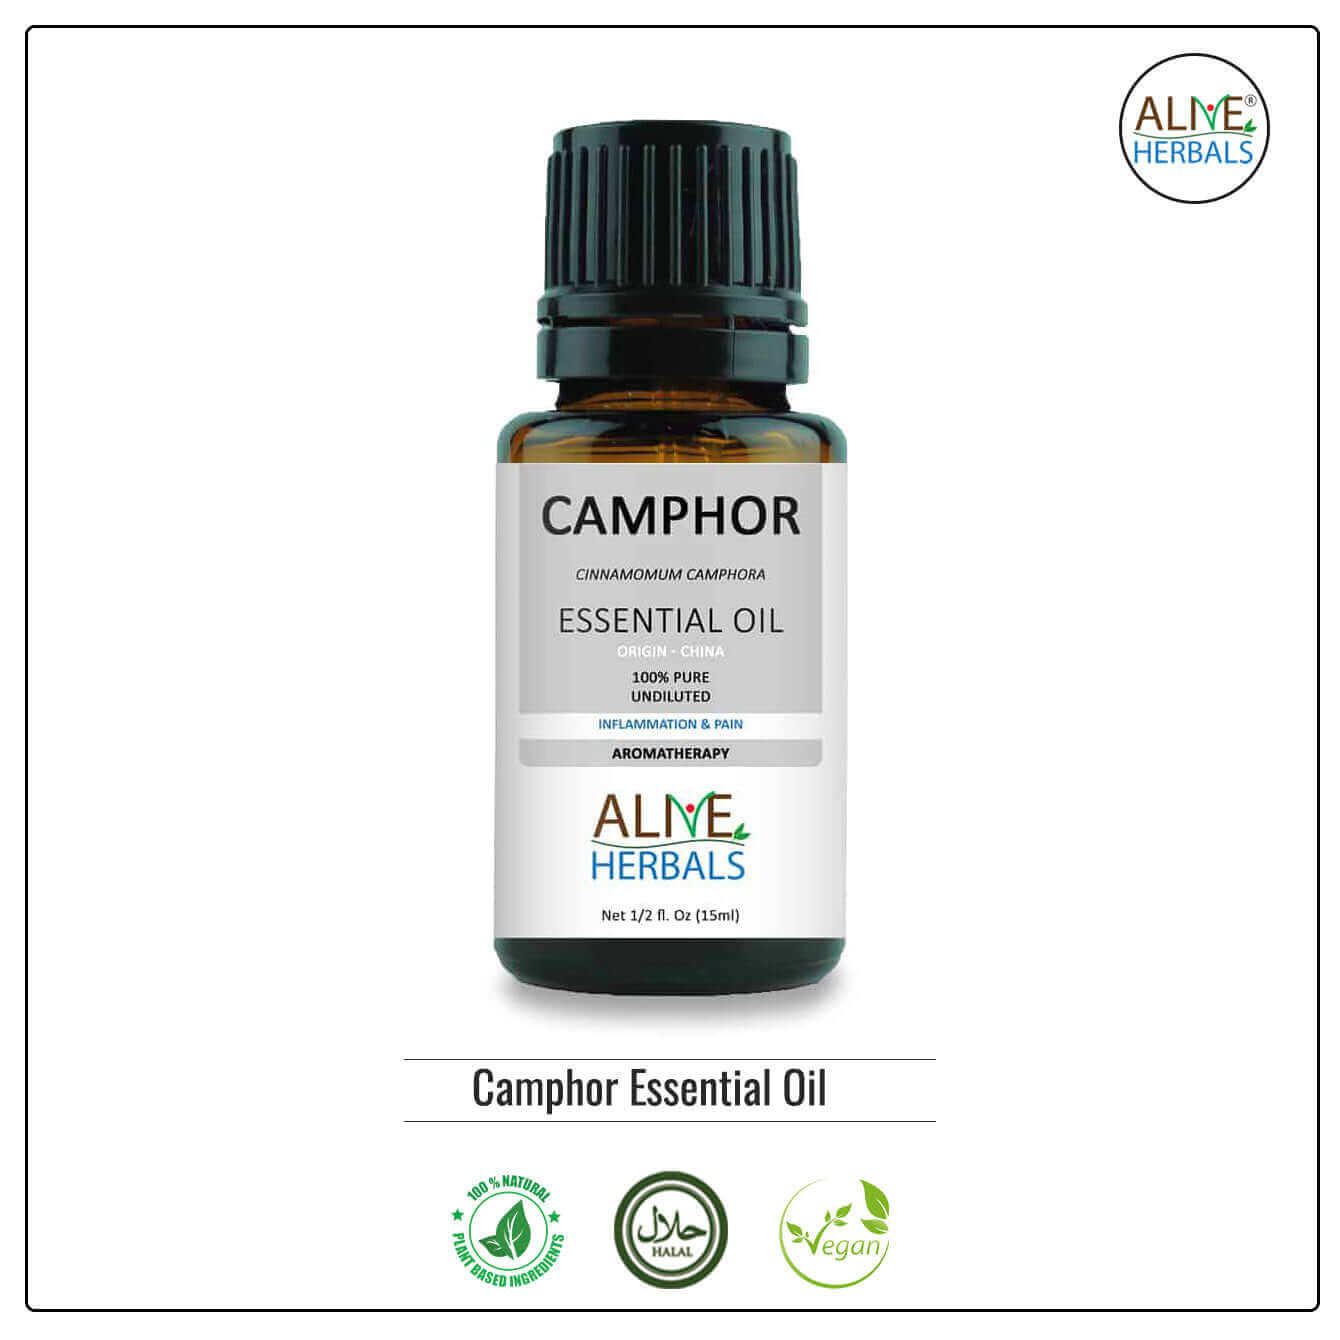 Camphor Essential Oil - Buy at Natural Food Store | Alive Herbals.